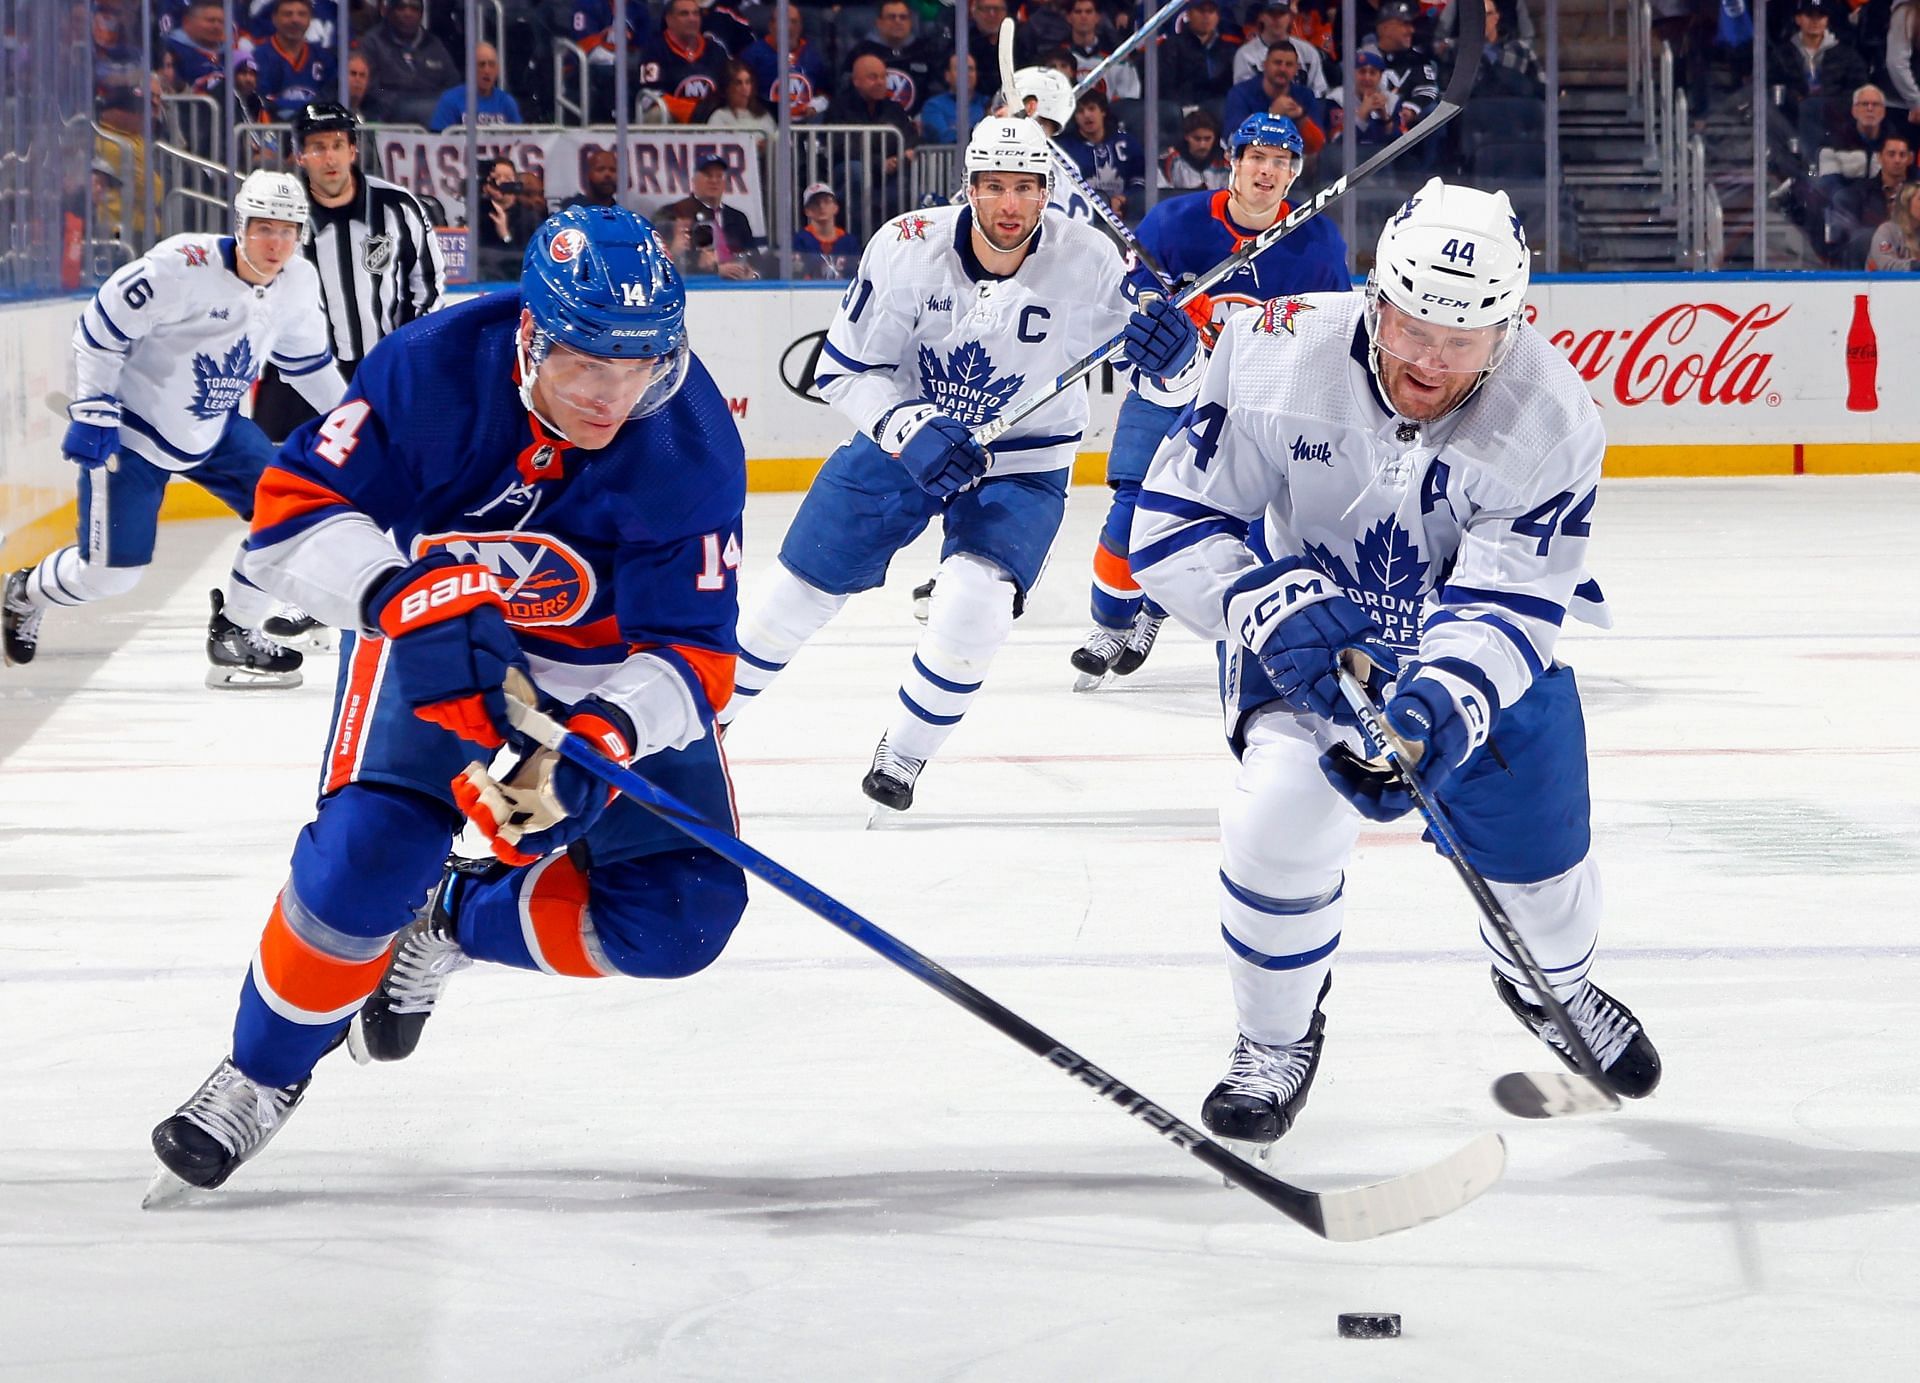 Toronto Maple Leafs vs New York Islanders Live streaming options